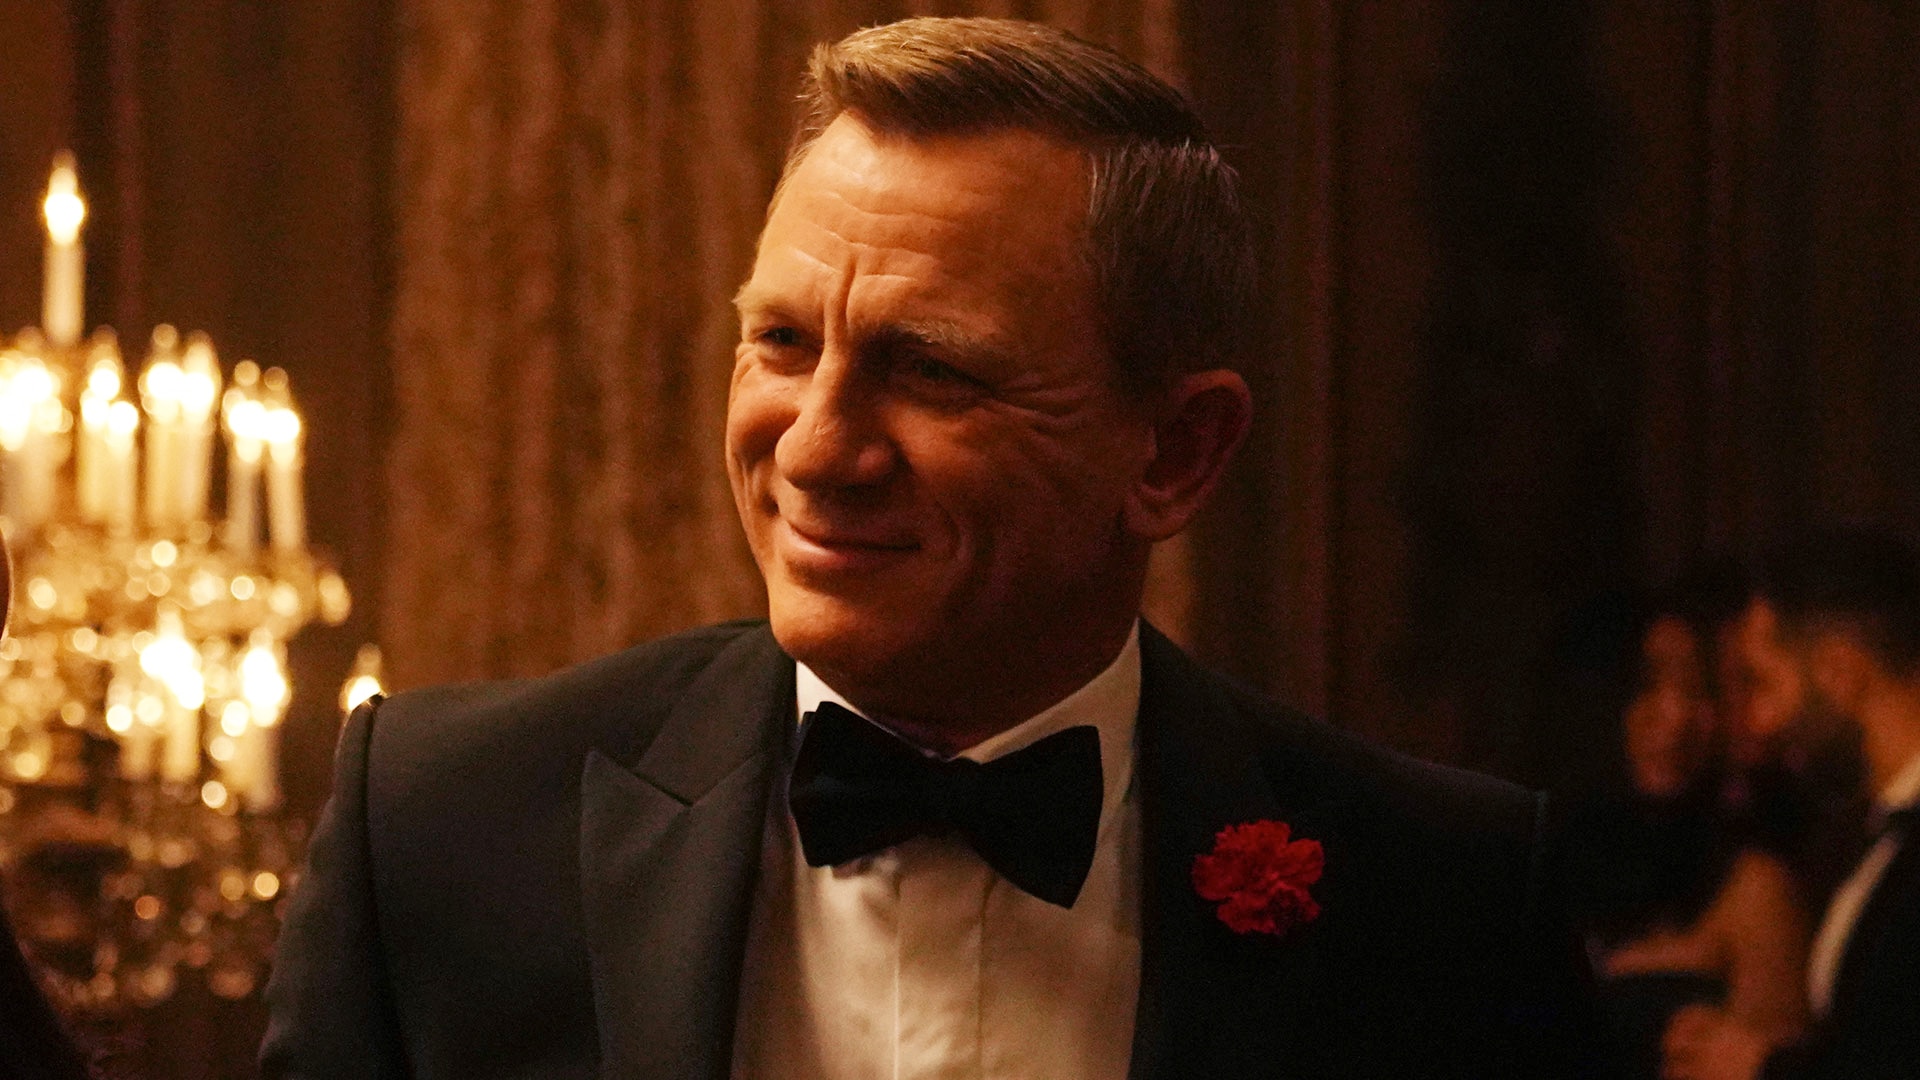 Watch Saturday Night Live Highlight: James Bond Scene - NBC.com